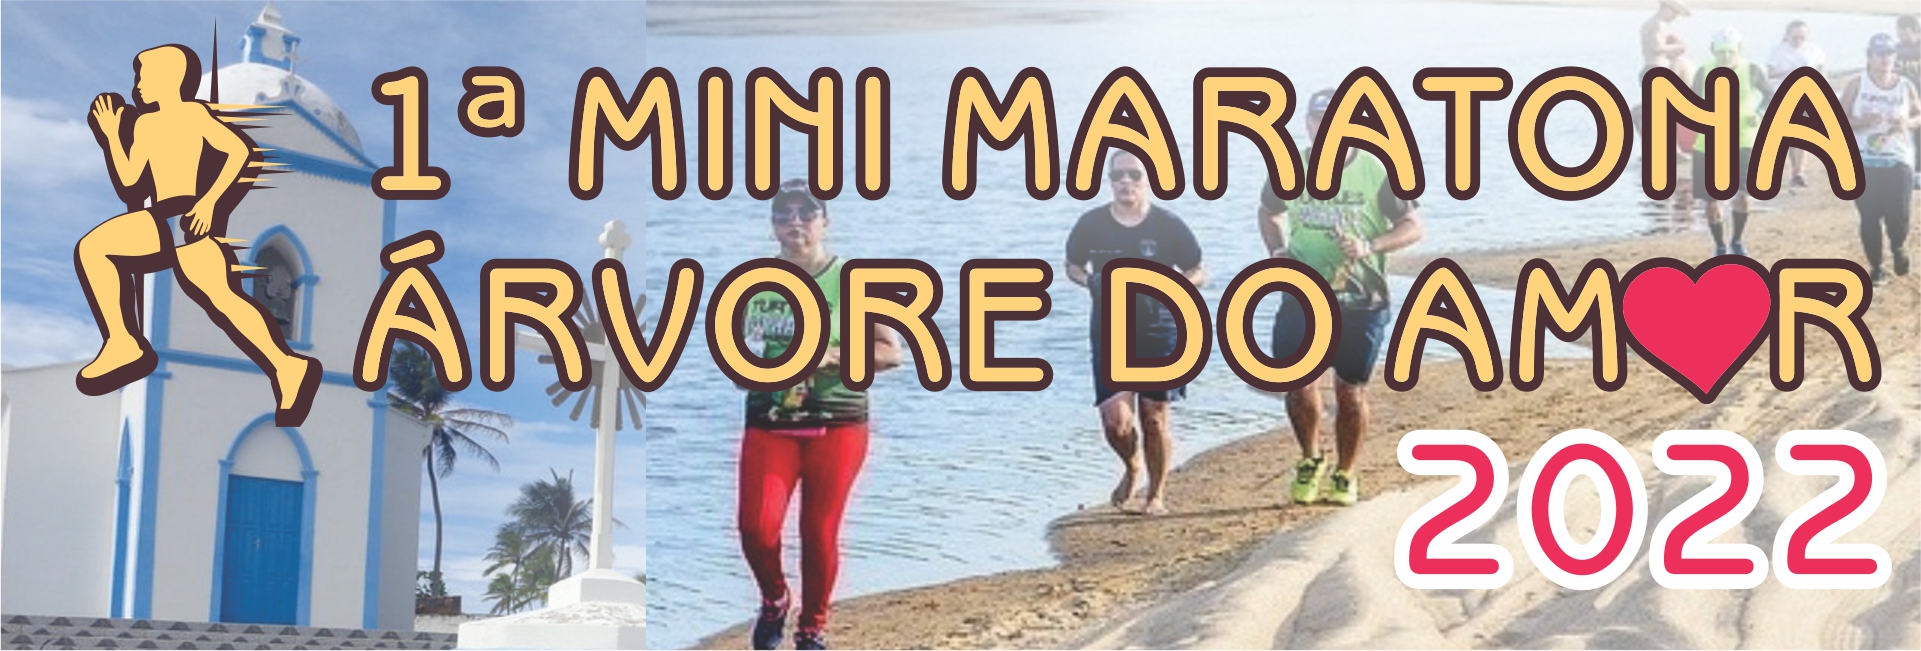 mini-maratona-arvore-do-amor-2022-banner1